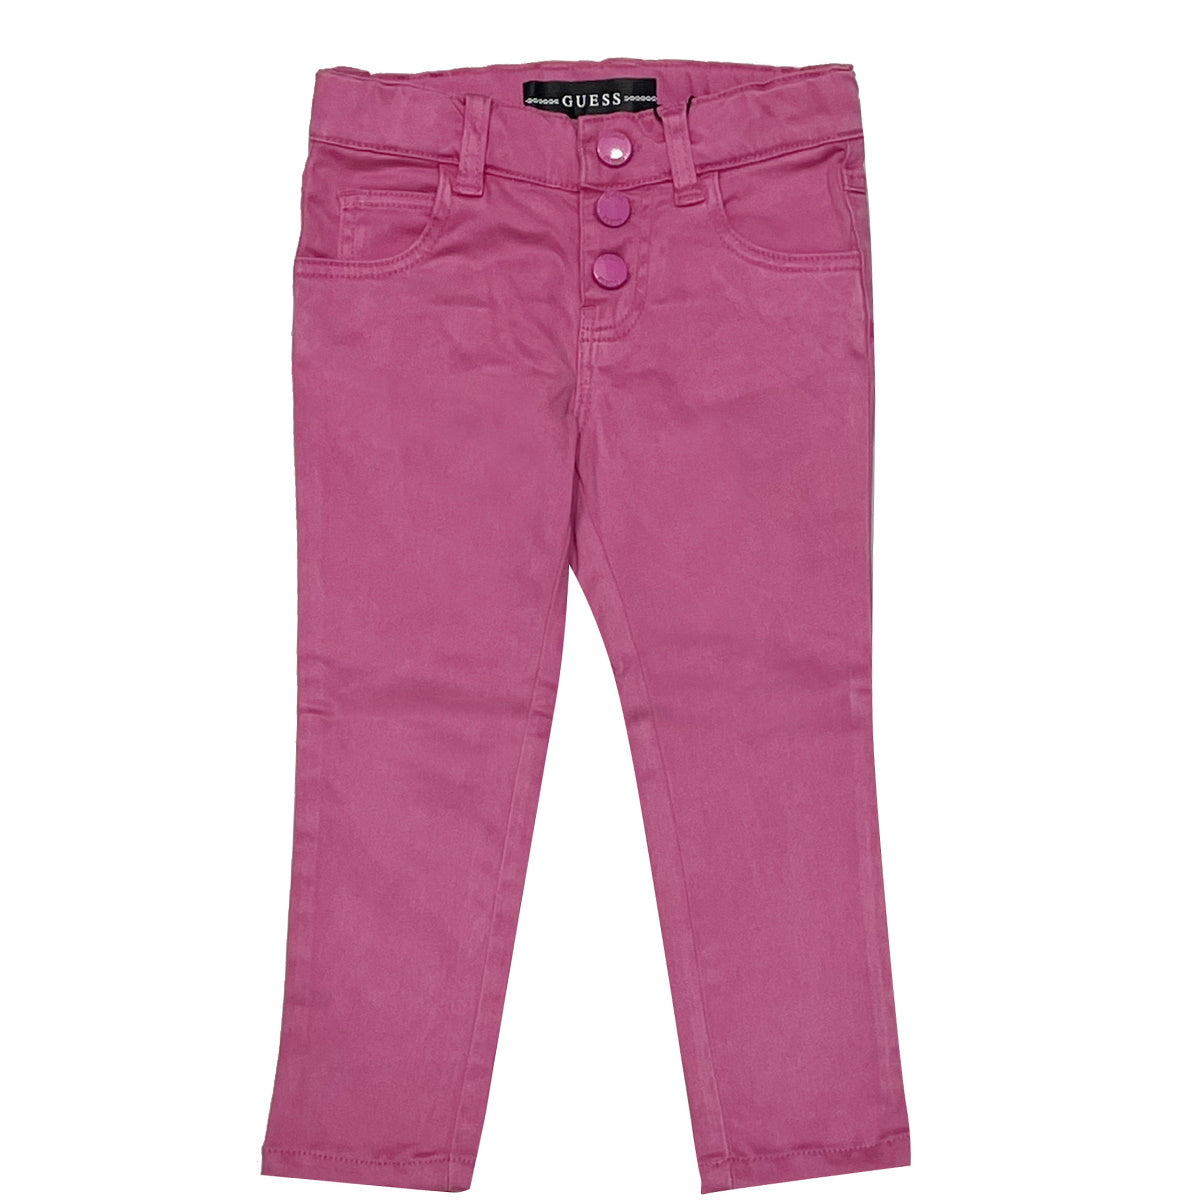 Guess pantalone skinny bambina cotone stretch rosa